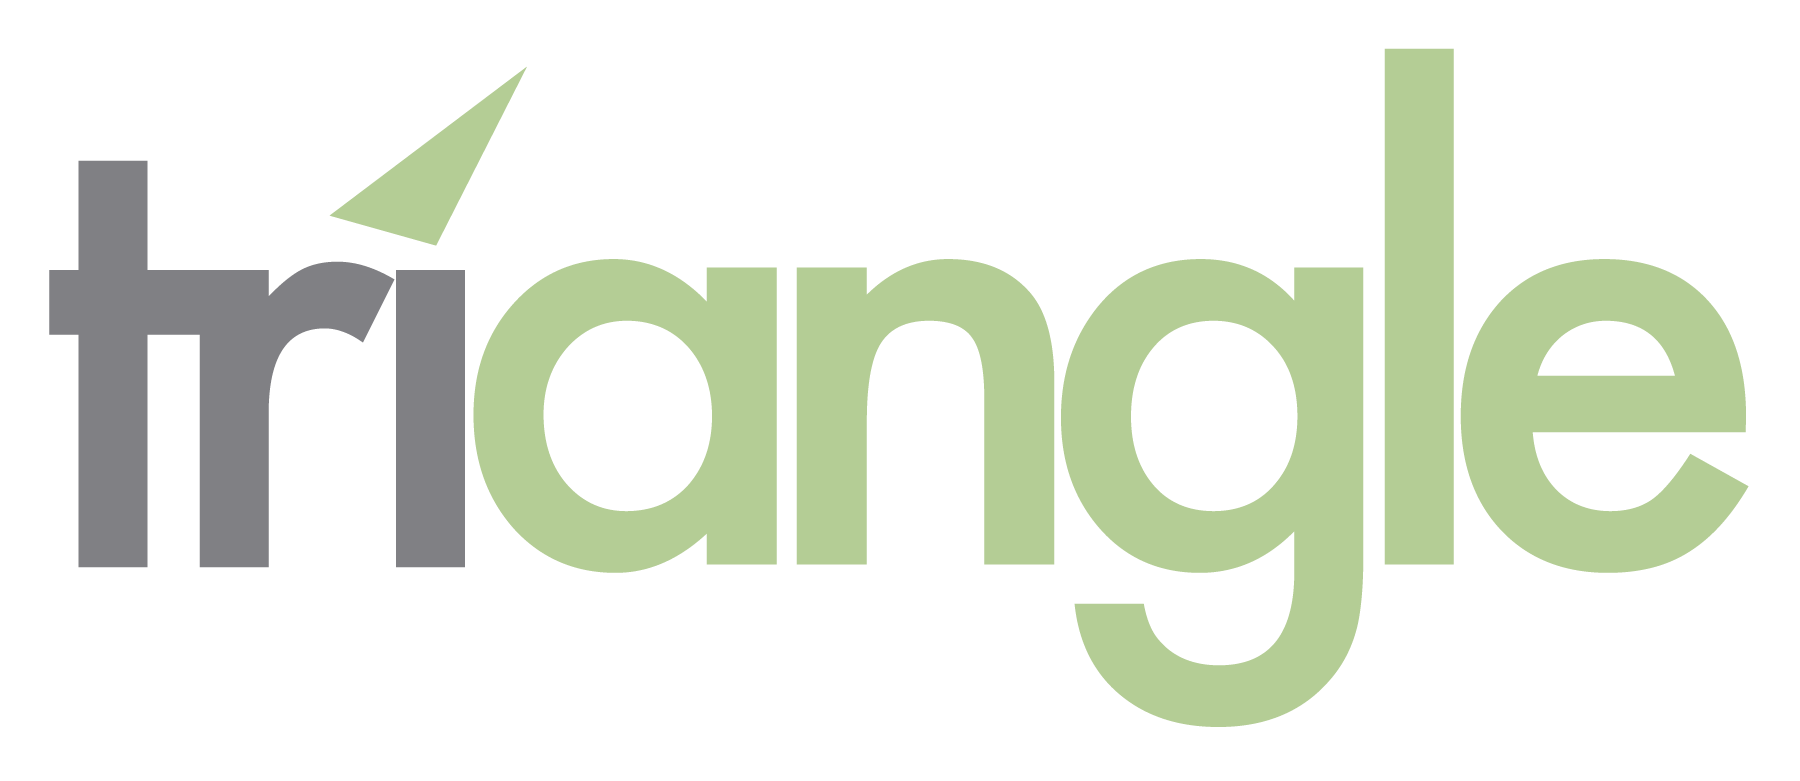 Google Triangle Logo - Triangle Manufacturing